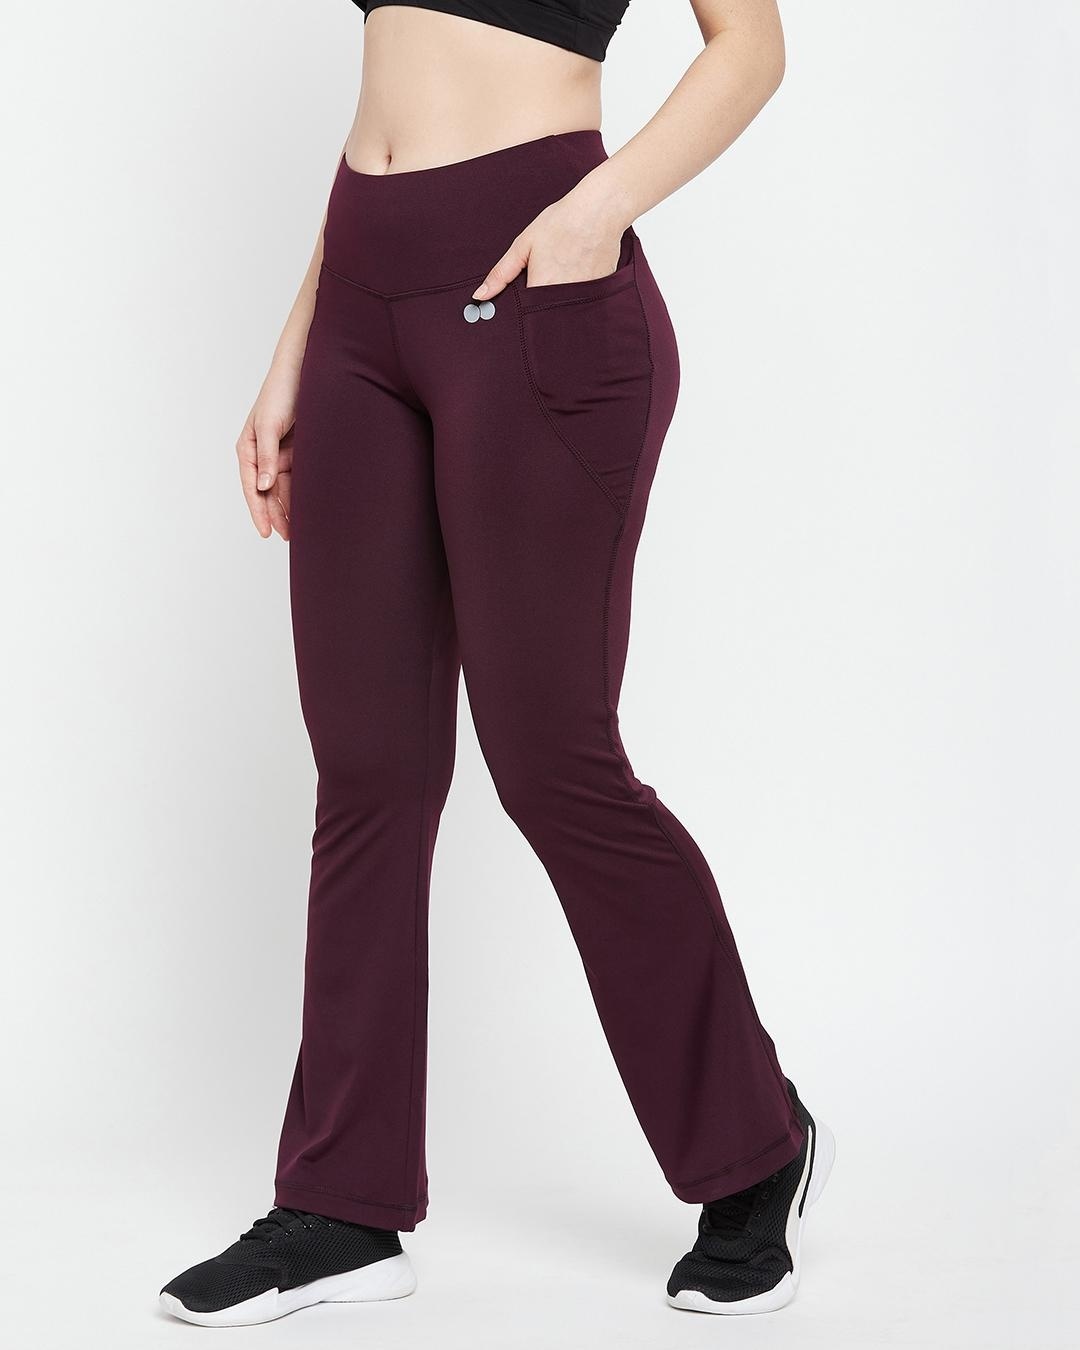 Shop Women's Purple Slim Fit Tights-Back